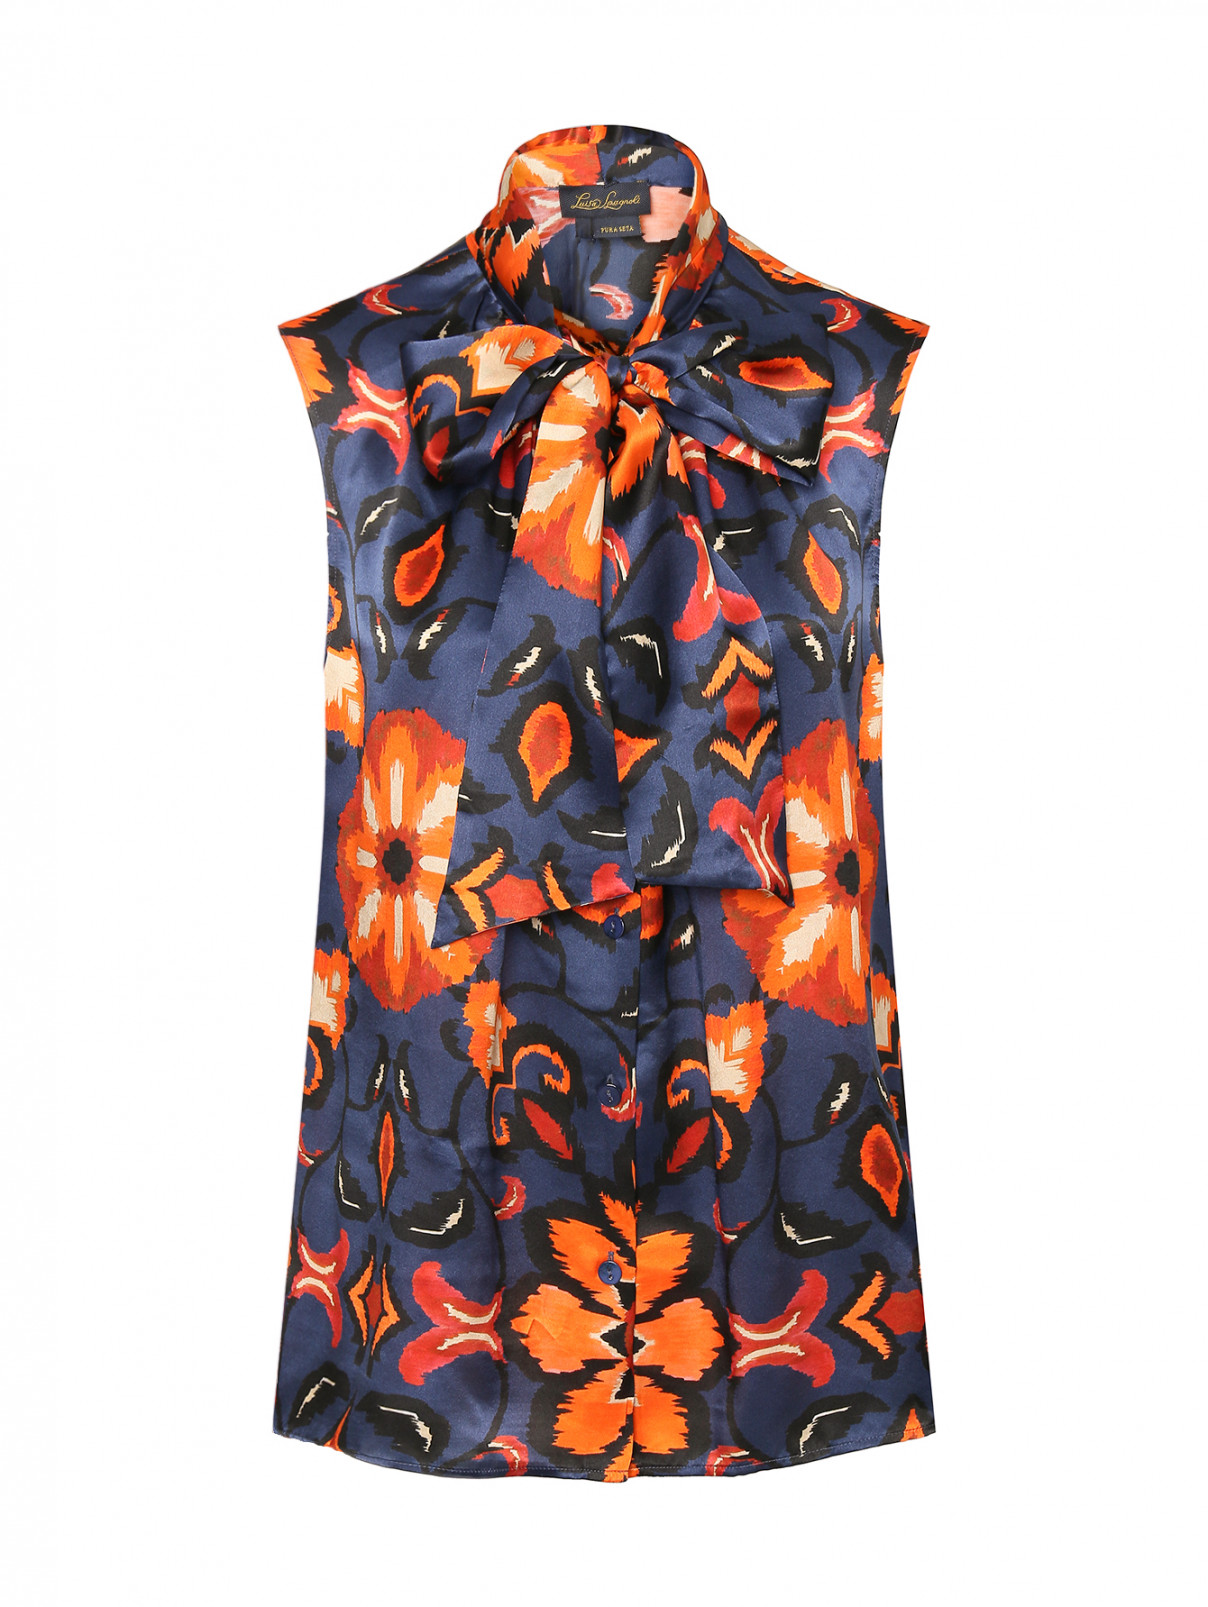 Блуза из шелка без рукавов Luisa Spagnoli  –  Общий вид  – Цвет:  Узор